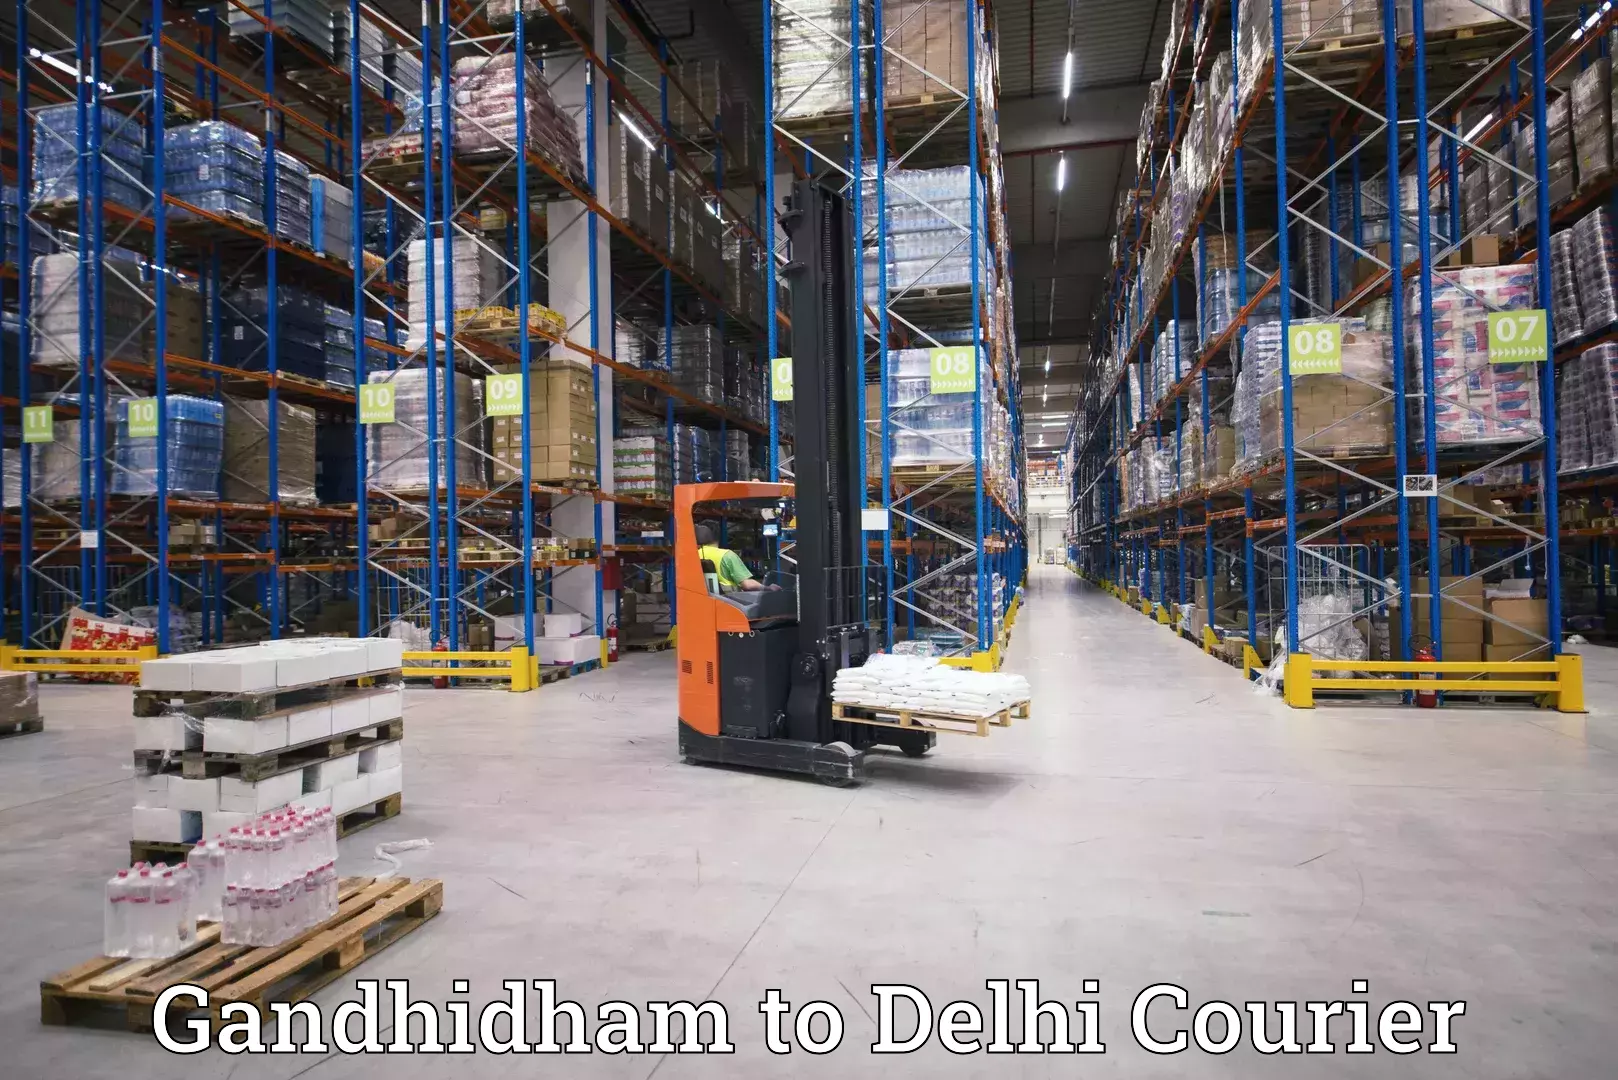 Express delivery capabilities Gandhidham to Delhi